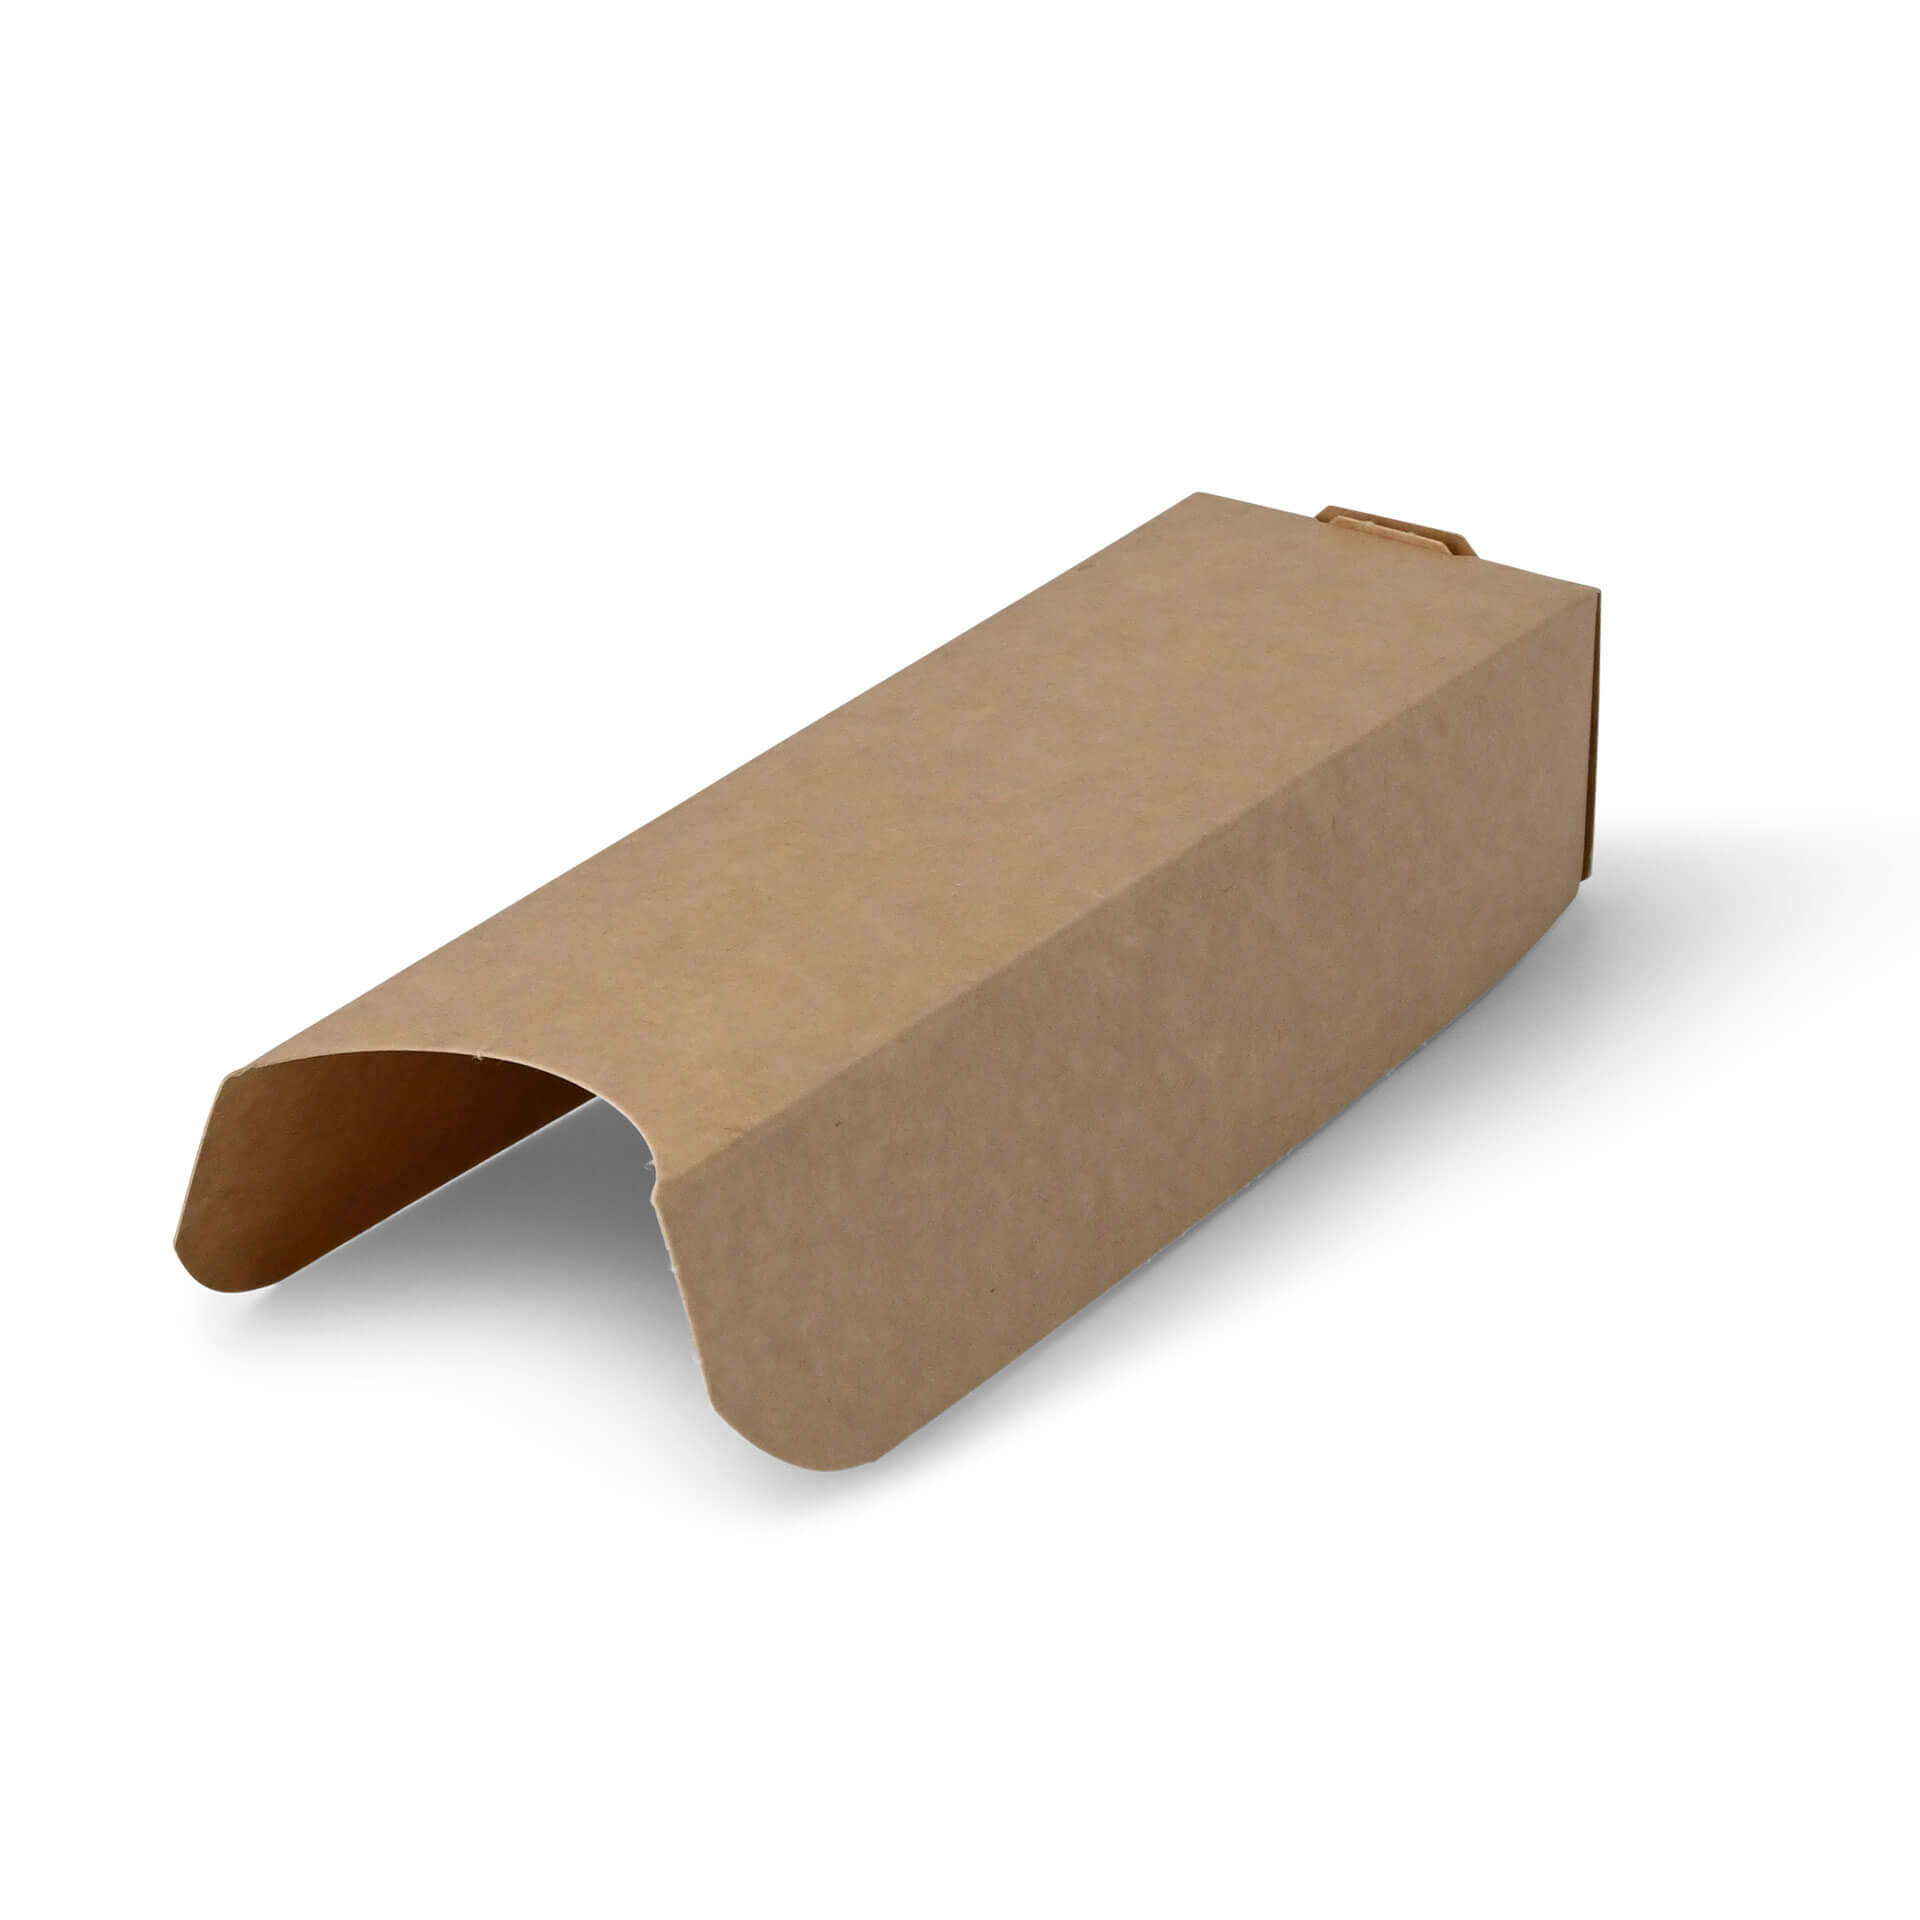 Hot dog Schale Karton 18 x 5 cm, braun, faltbar